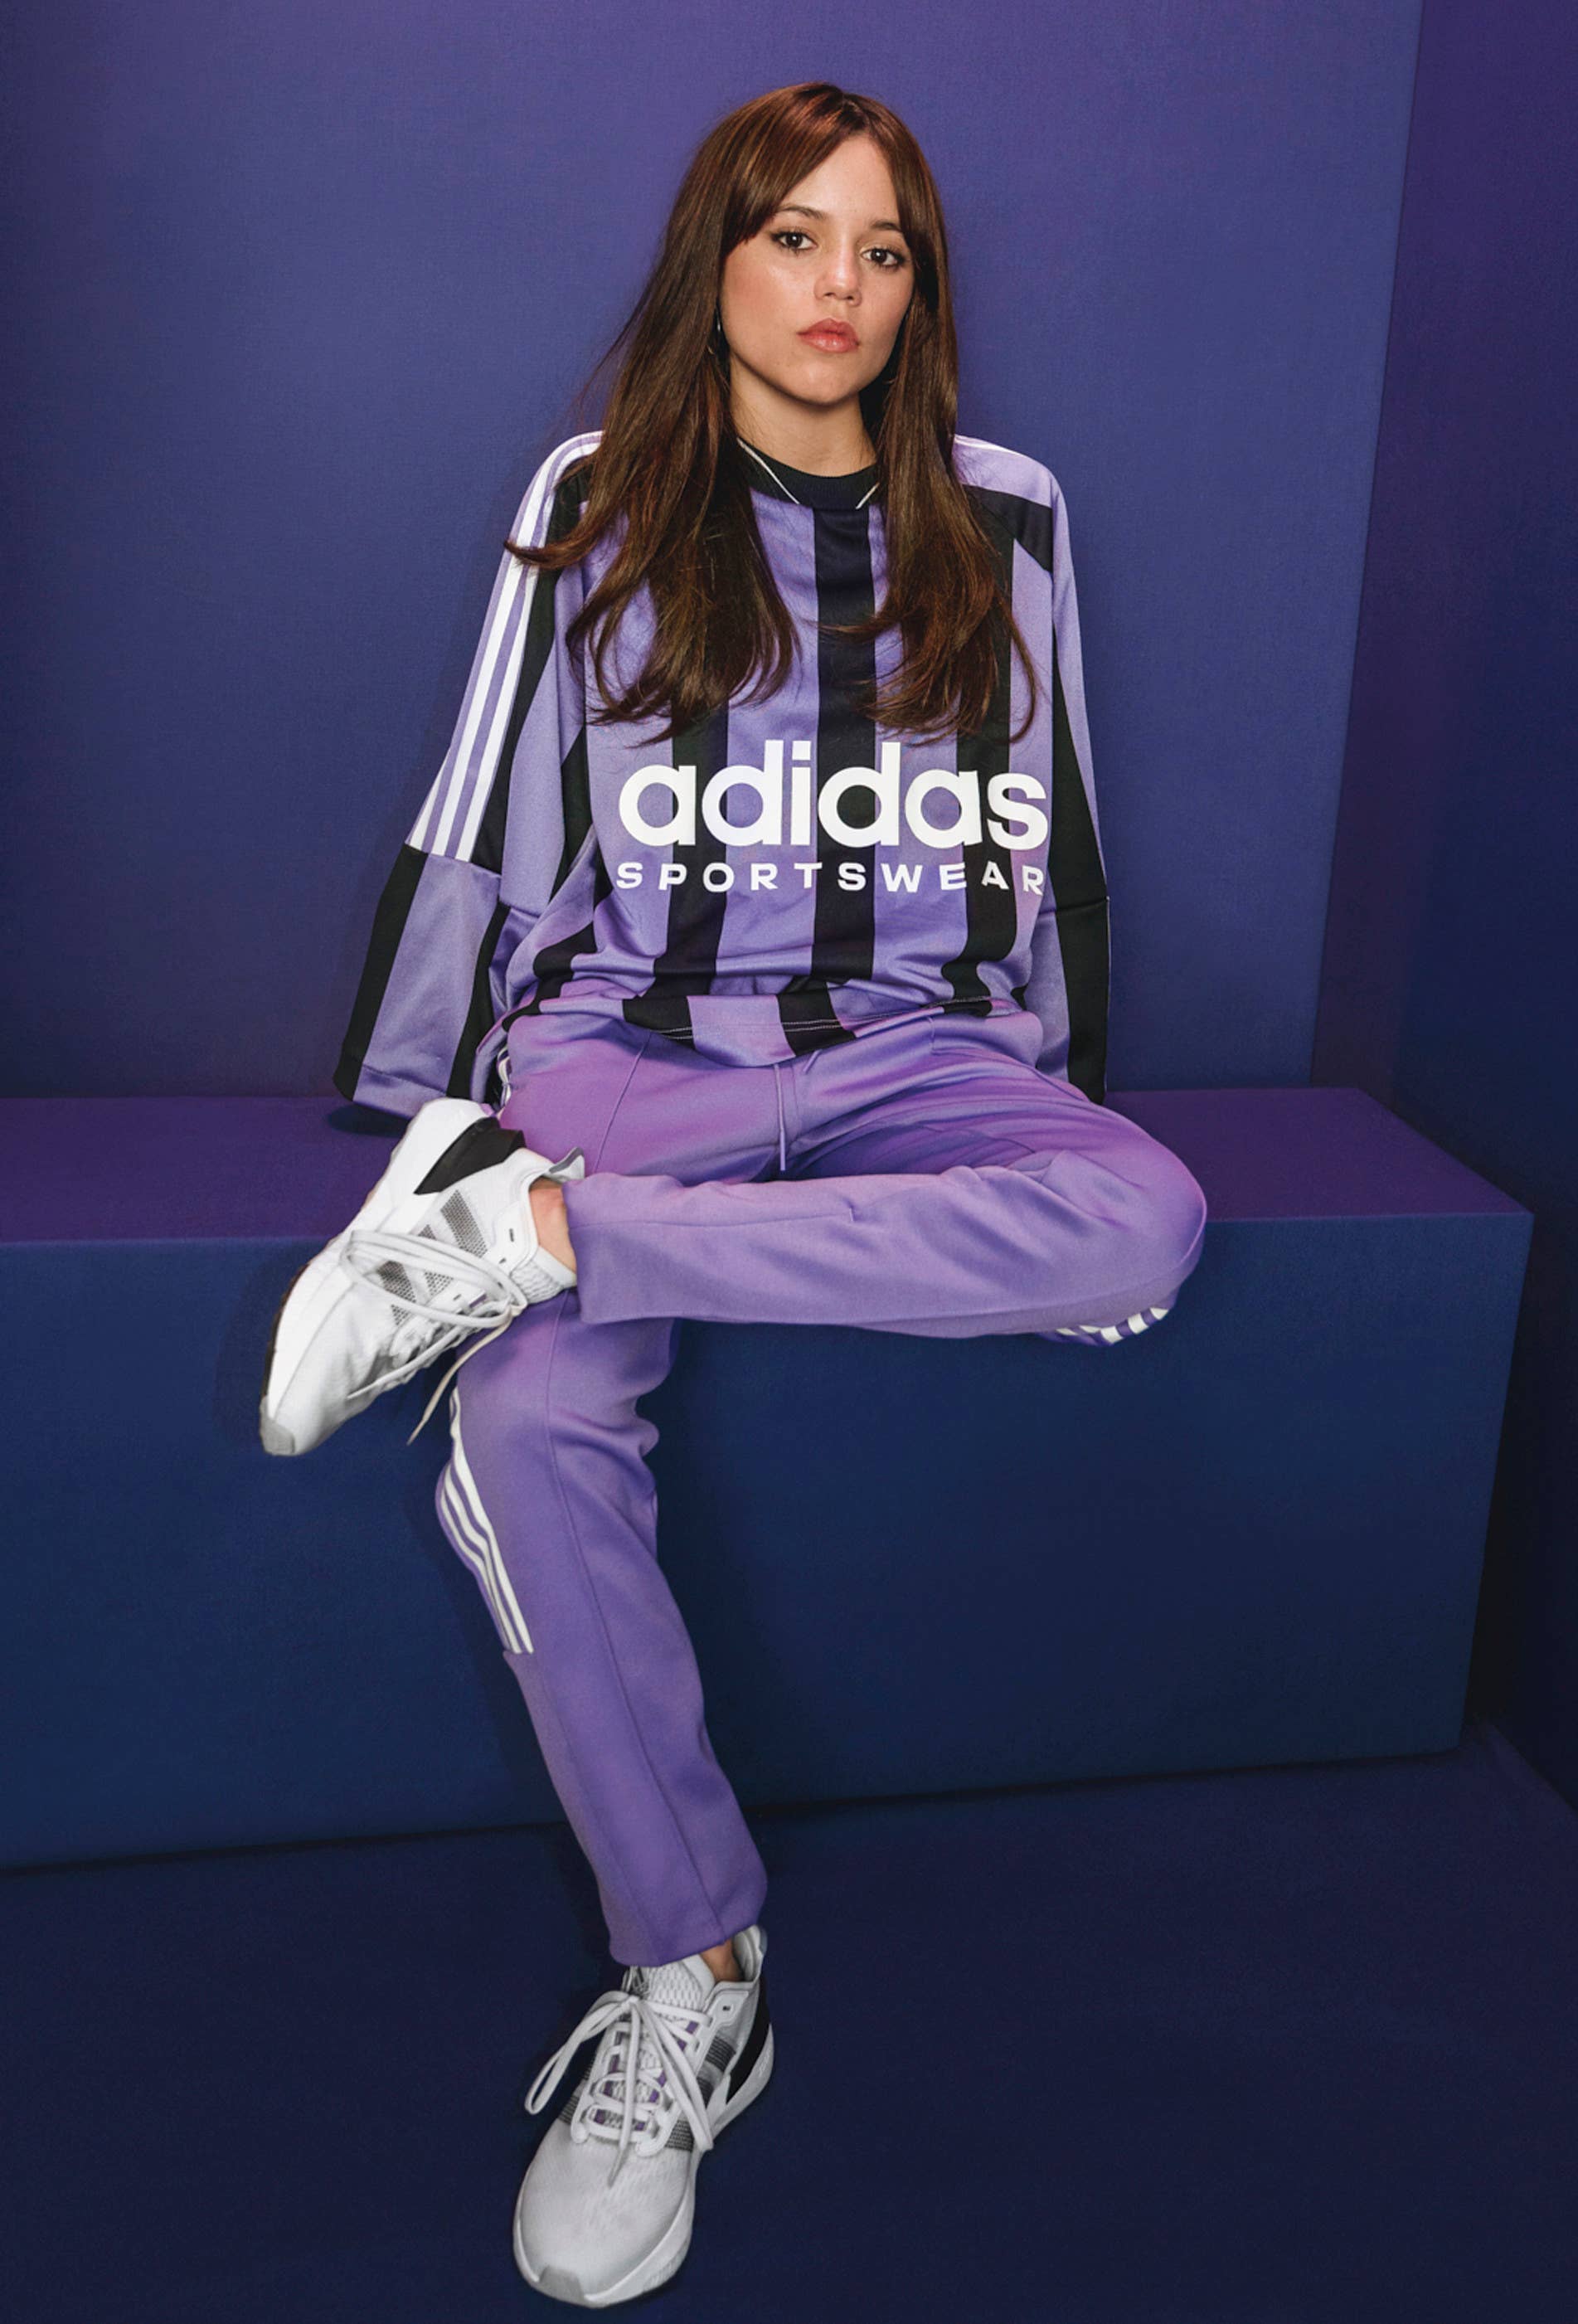 Adidas Signs Jenna Ortega